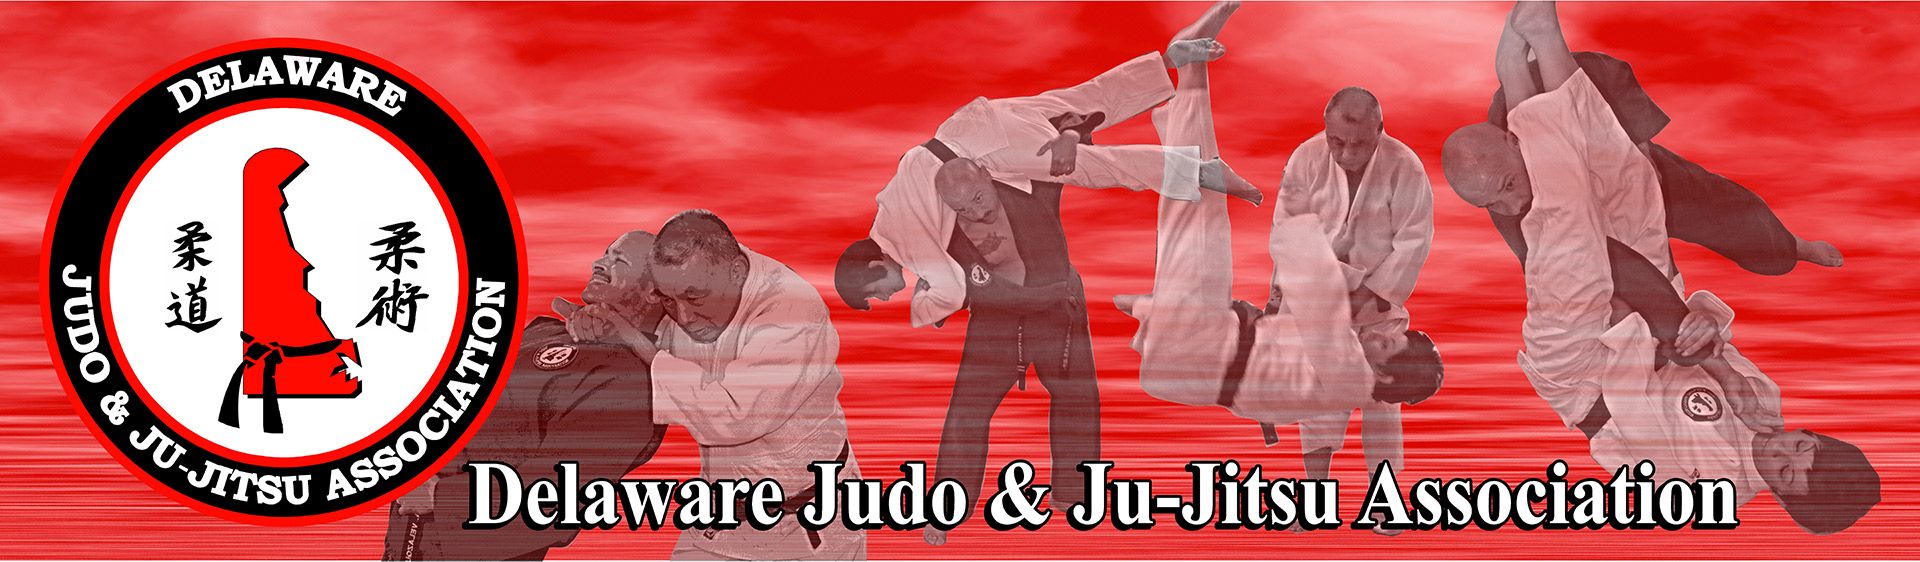 Delaware Judo & Ju-Jitsu Association photo